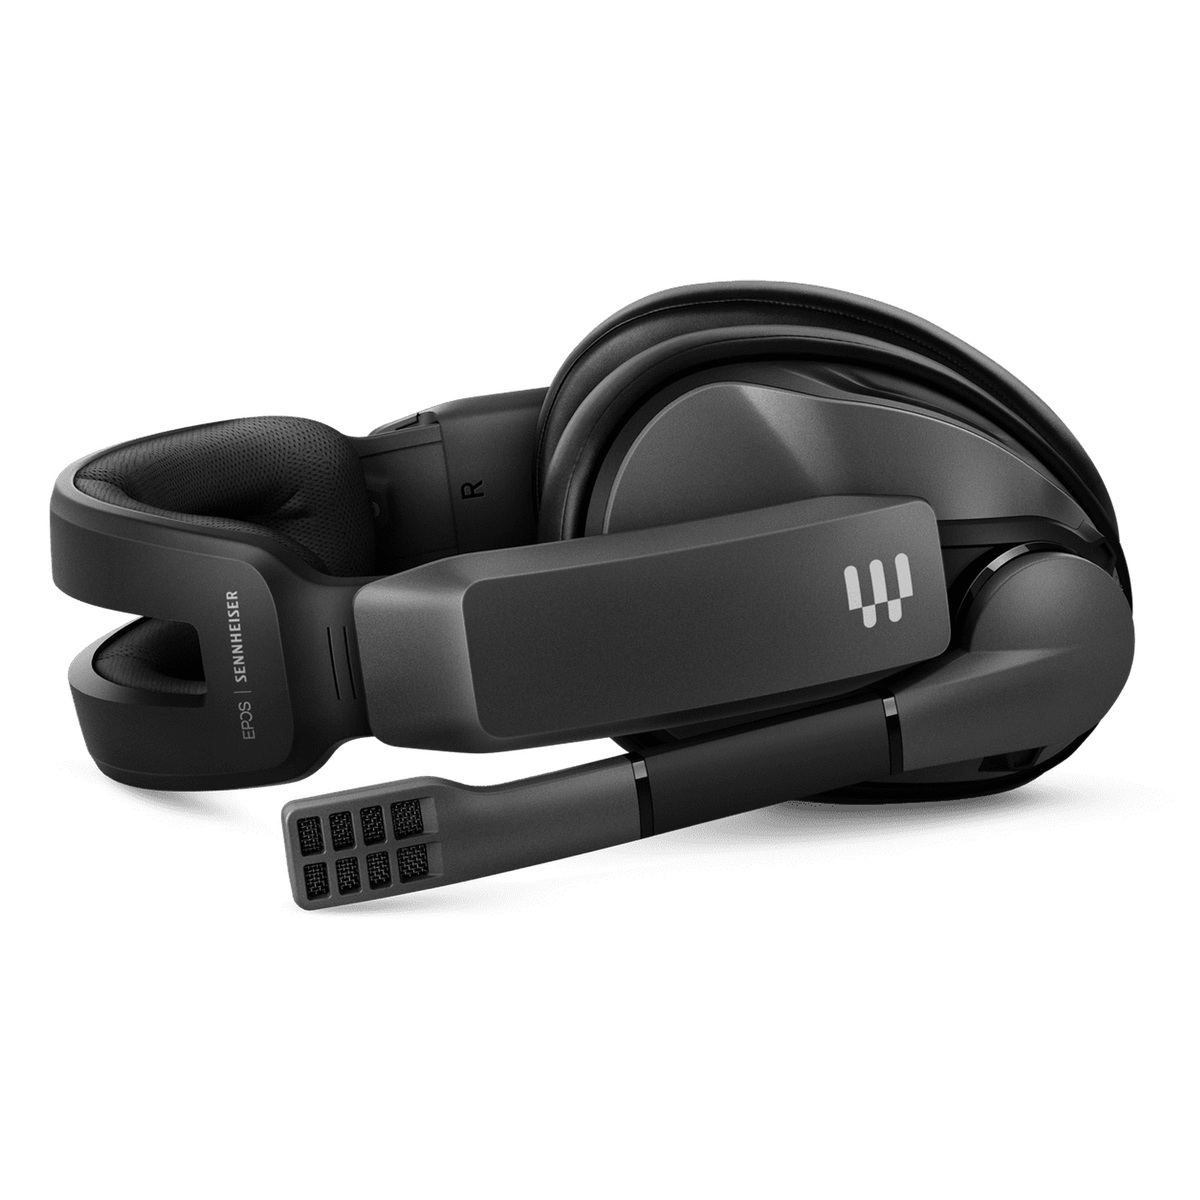 Sennheiser Wireless Gaming Headset, 100 Hrs Battery Life, Black, GSP370